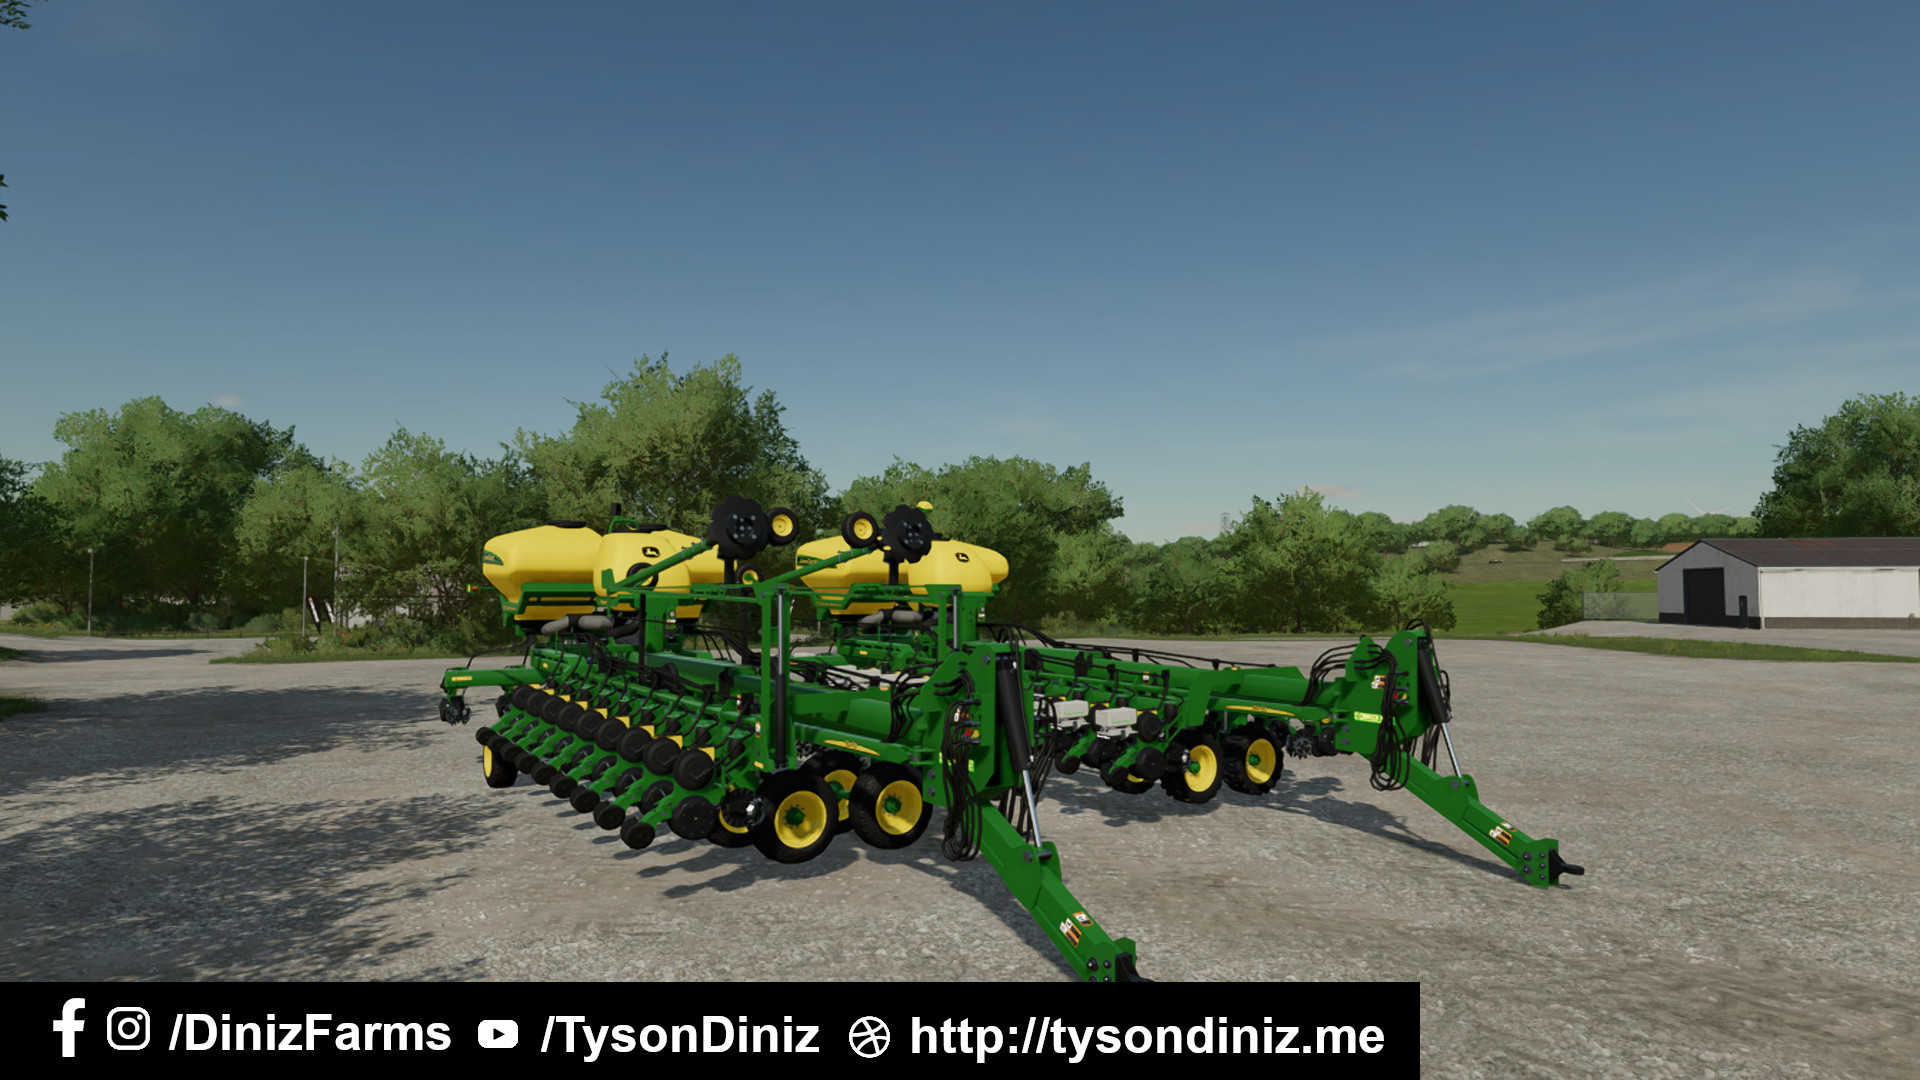 Fs22 Implements Diniz Farms Farming Simulator Modding 7990